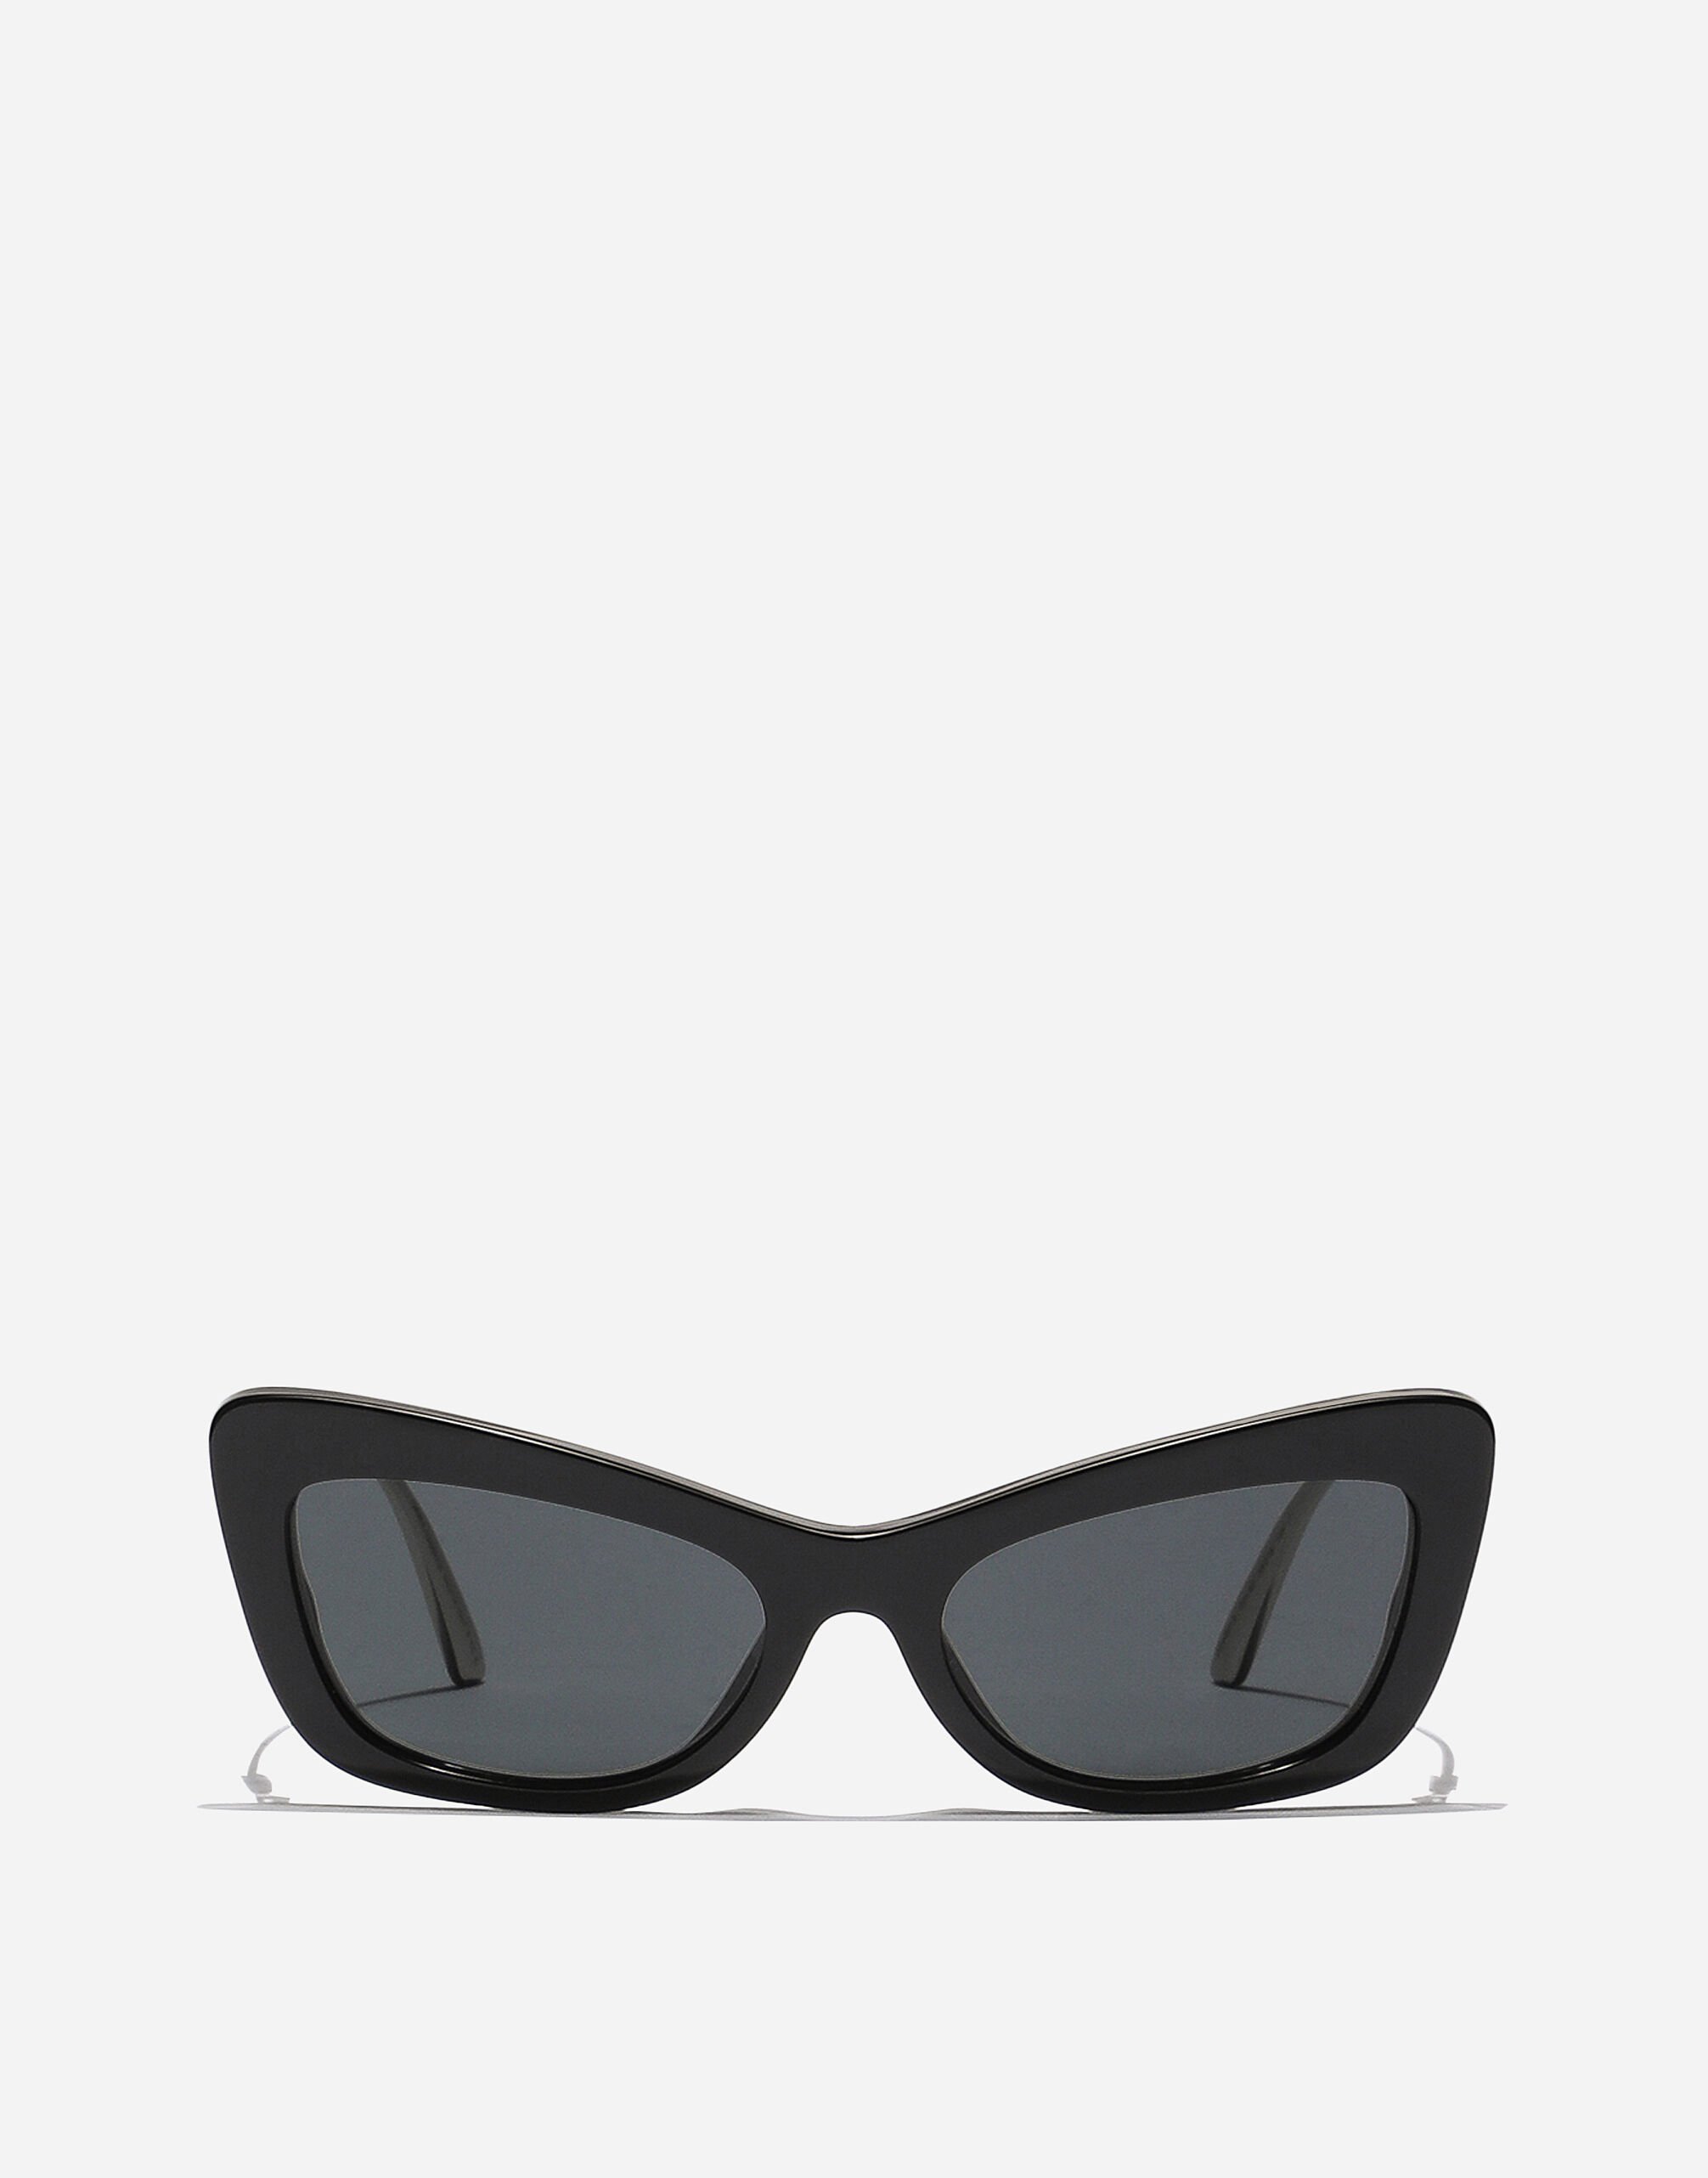 Dolce & Gabbana DG Crystal Sunglasses Black VG447AVP187